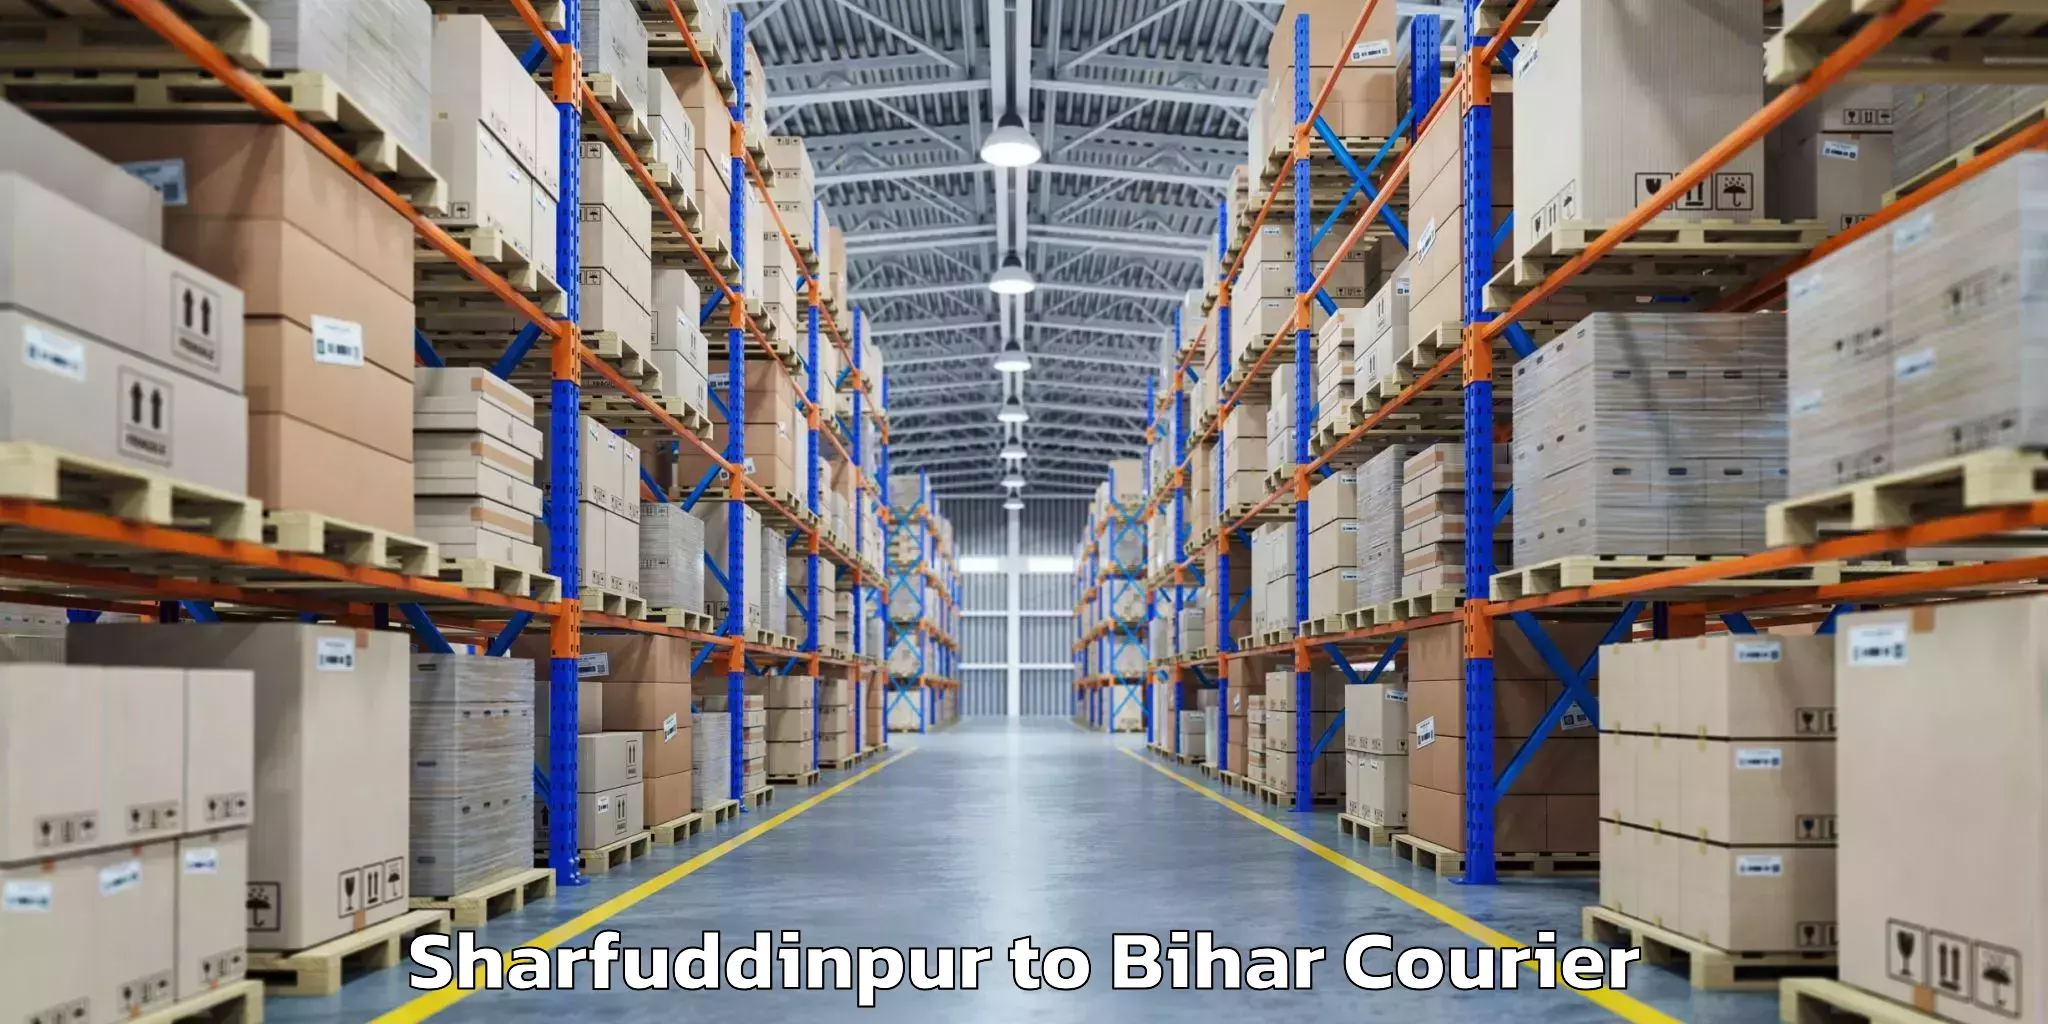 Luggage transport consulting Sharfuddinpur to Bihta